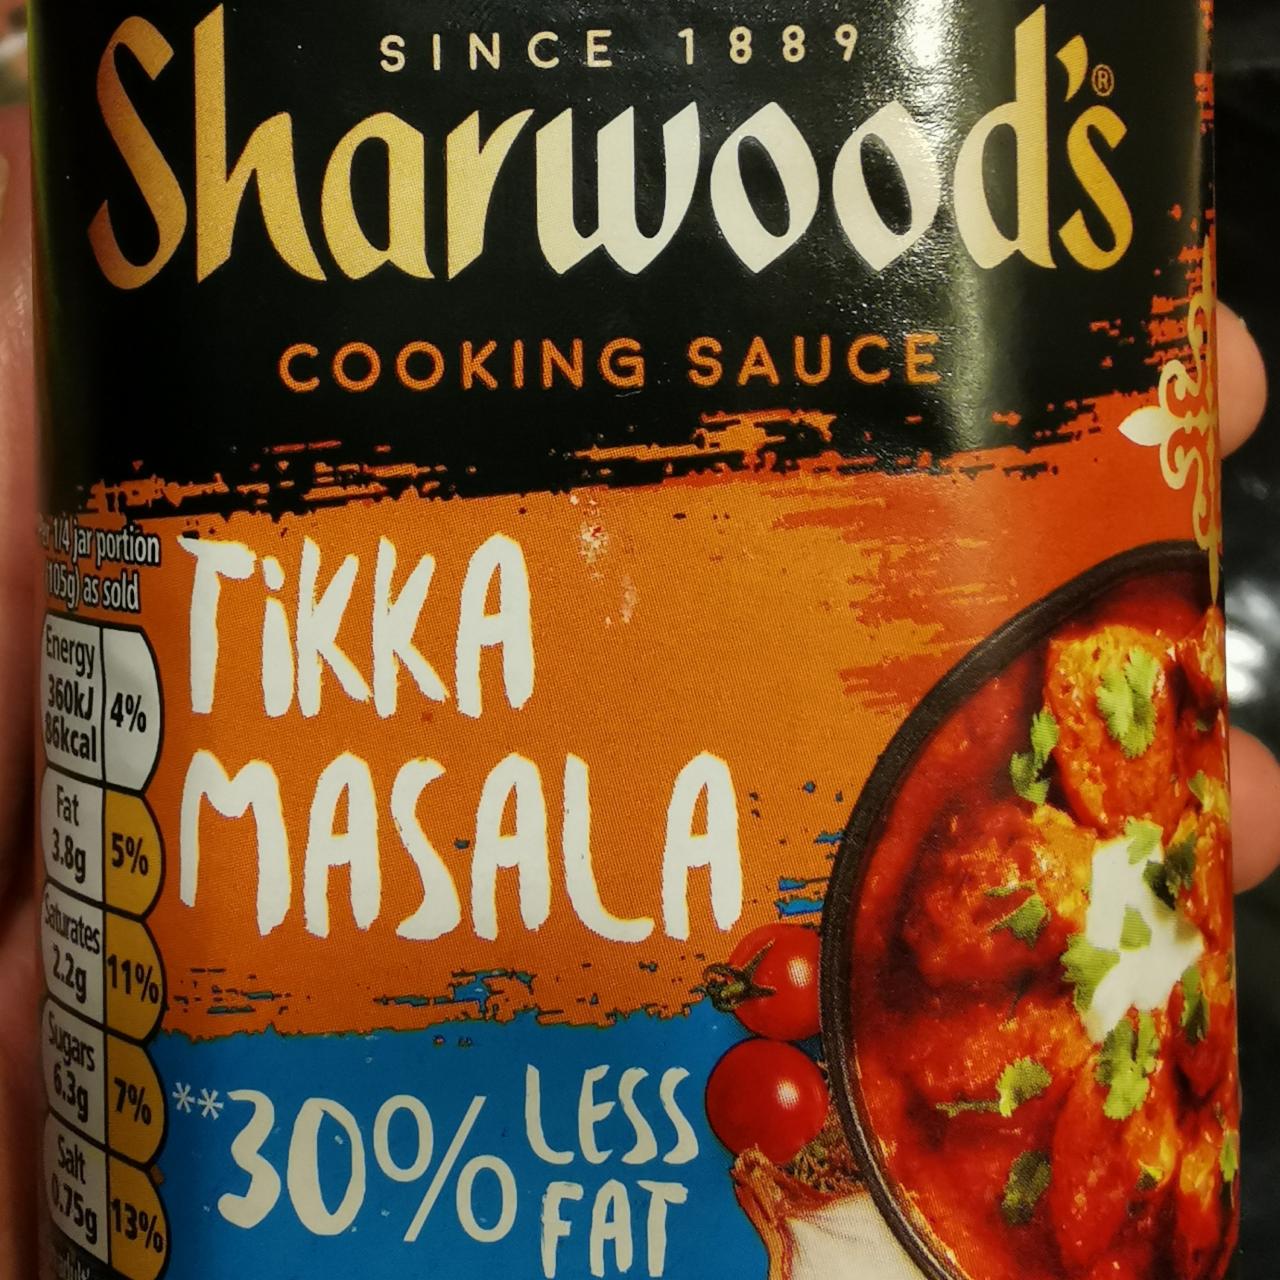 Fotografie - Tikka Masala Cooking Sauce - 30% less fat Sharwood's